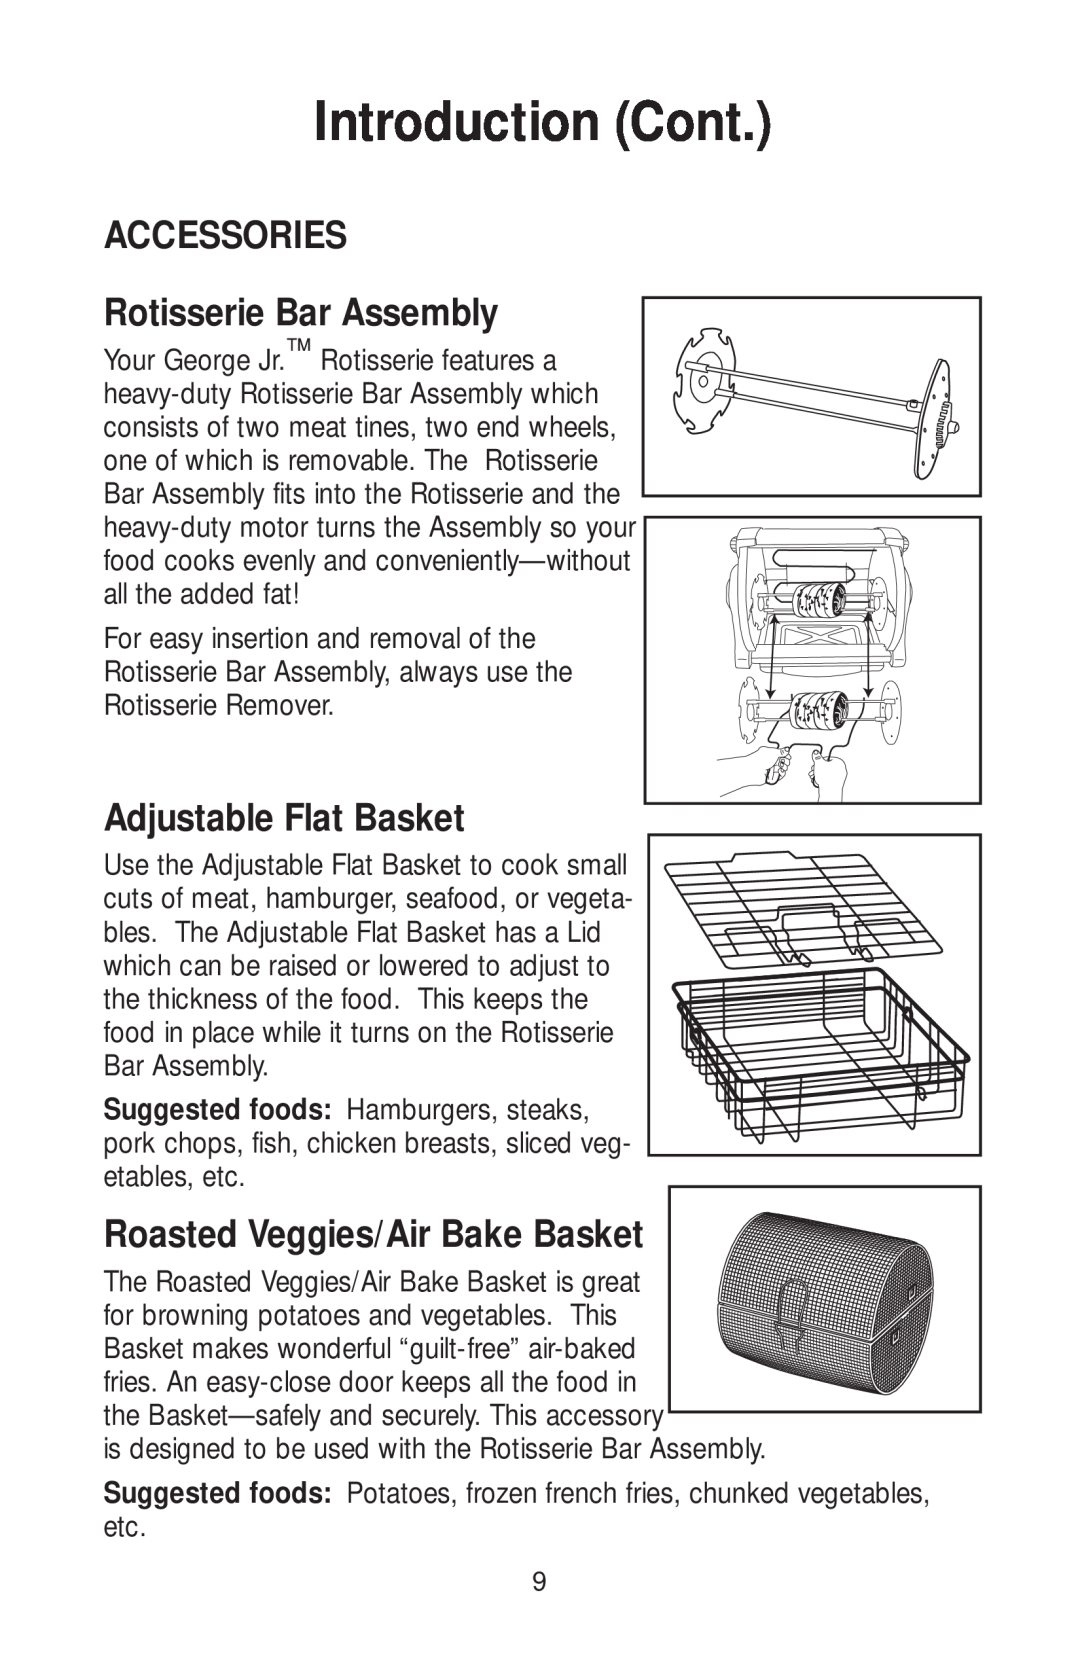 Salton GR82 owner manual Introduction Cont, ACCESSORIES Rotisserie Bar Assembly, Adjustable Flat Basket 